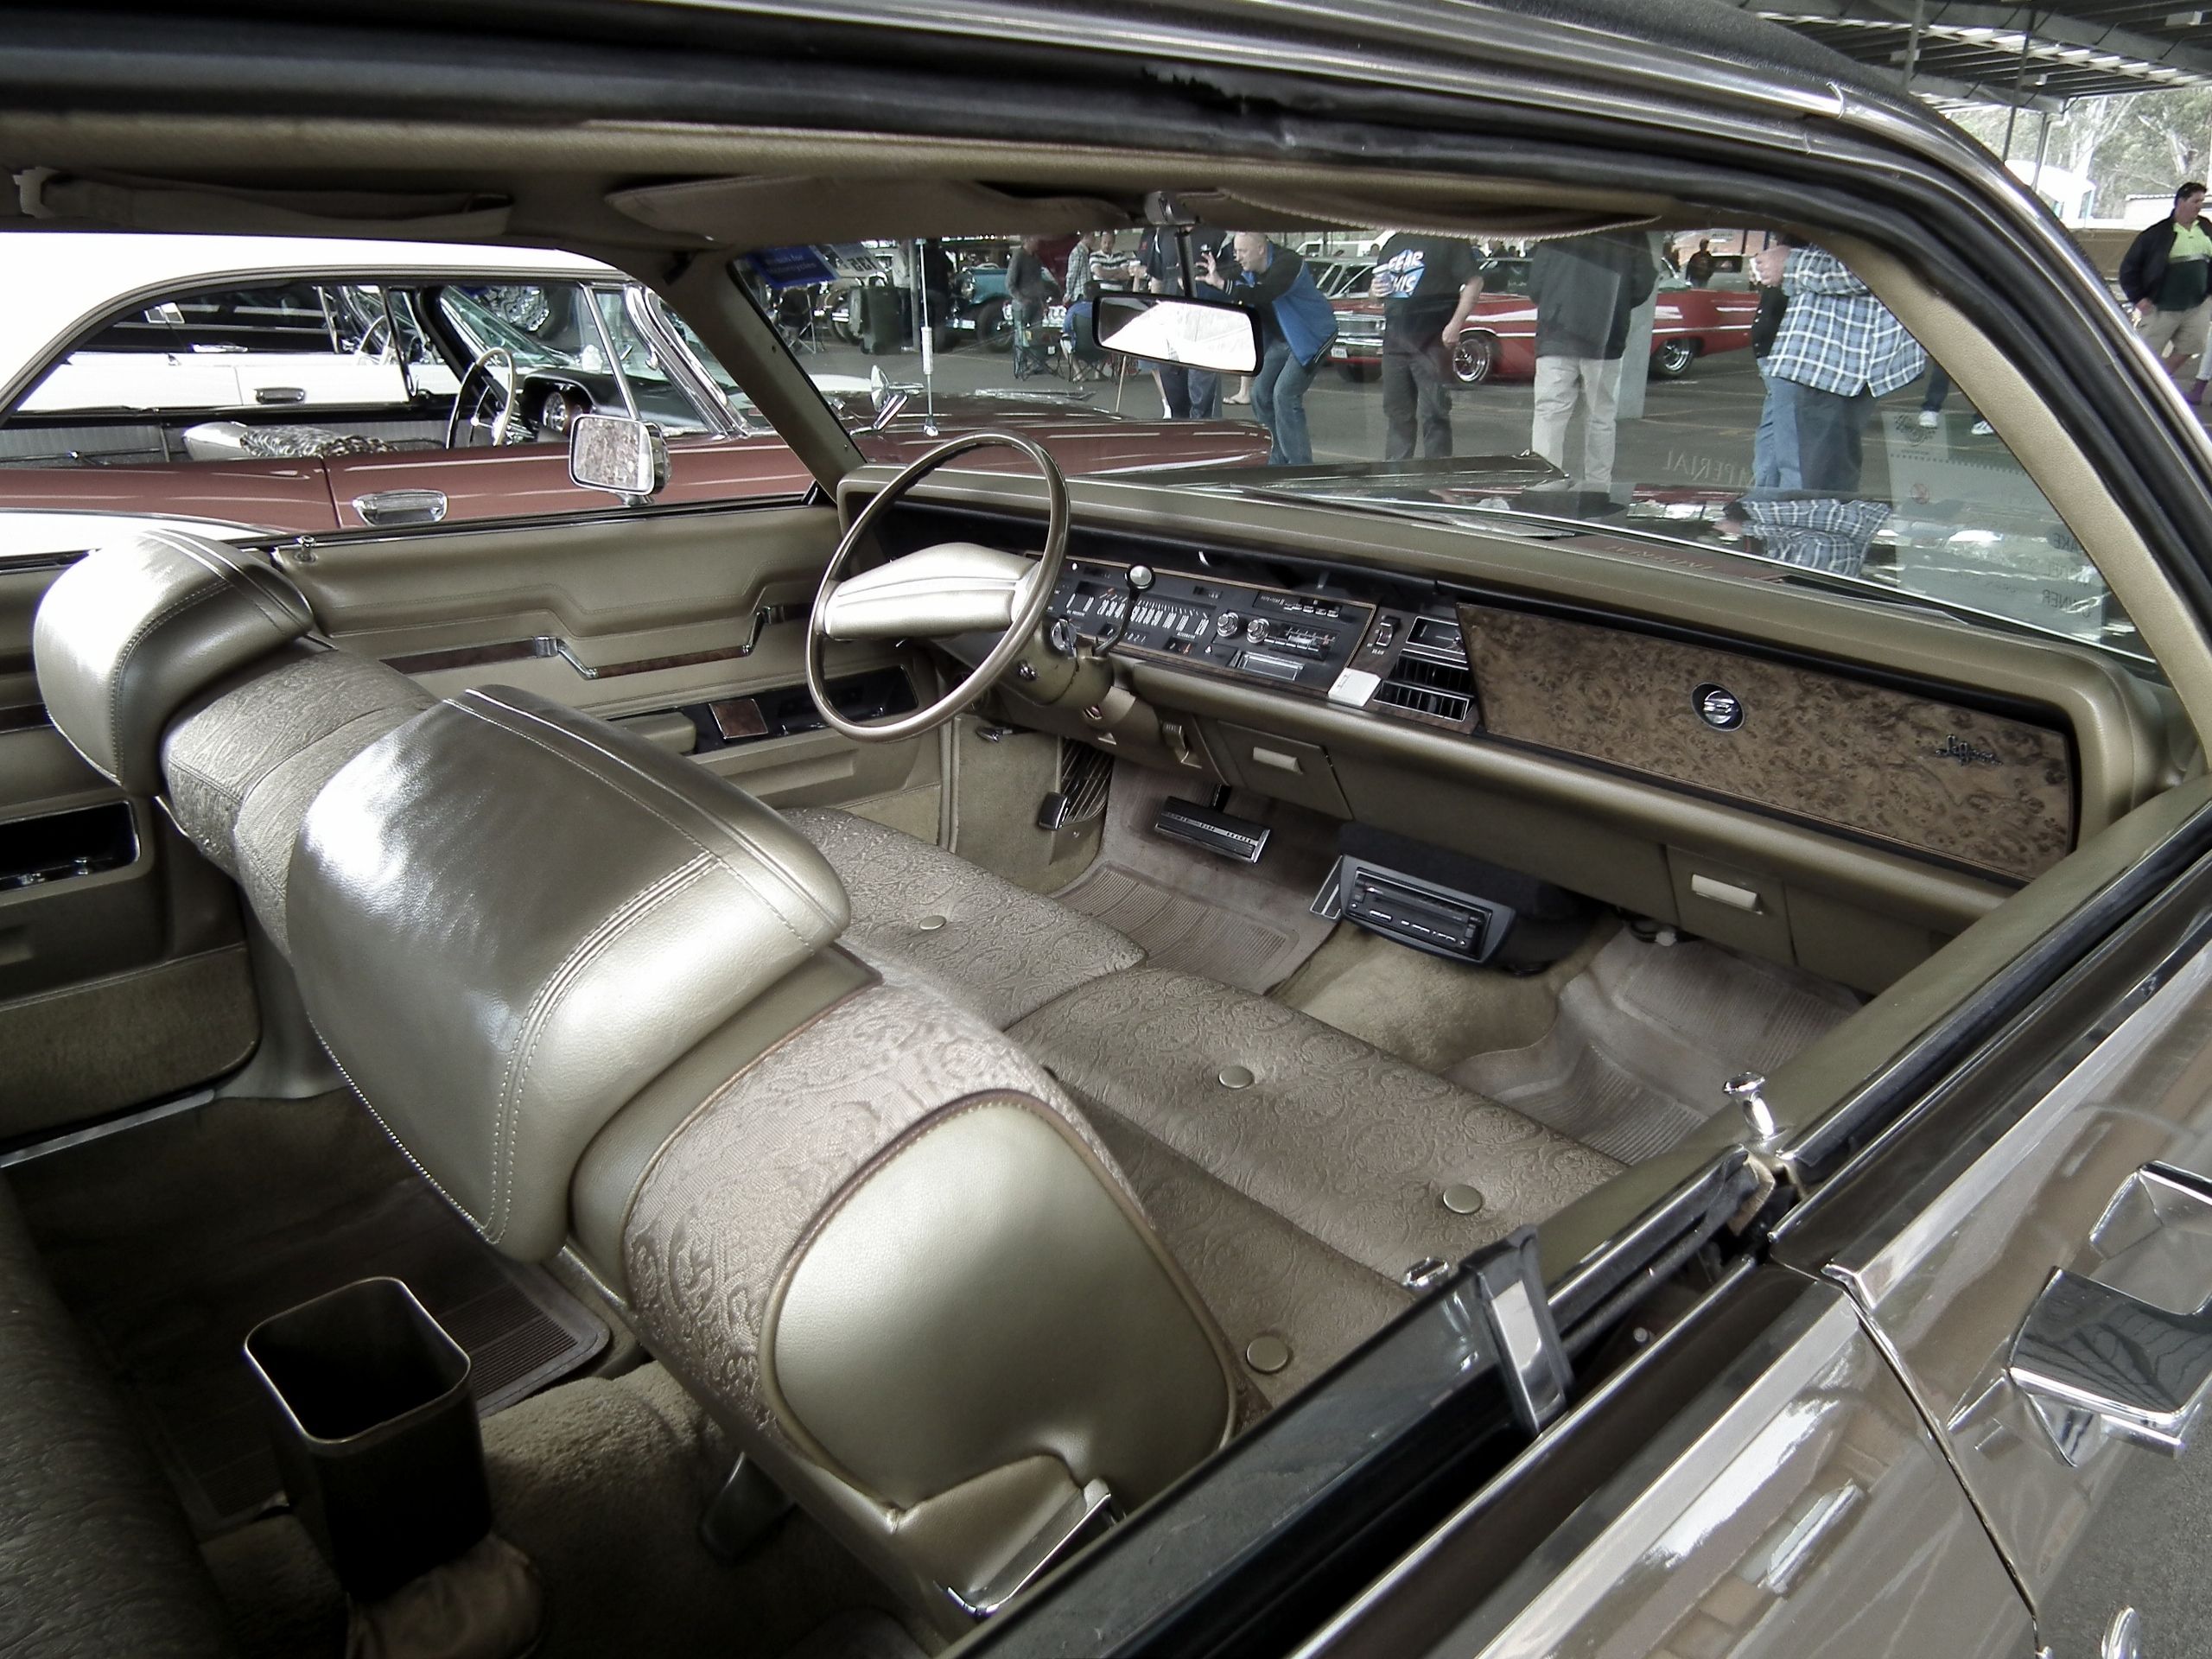 The interior of the 1971 Chrysler LeBaron 